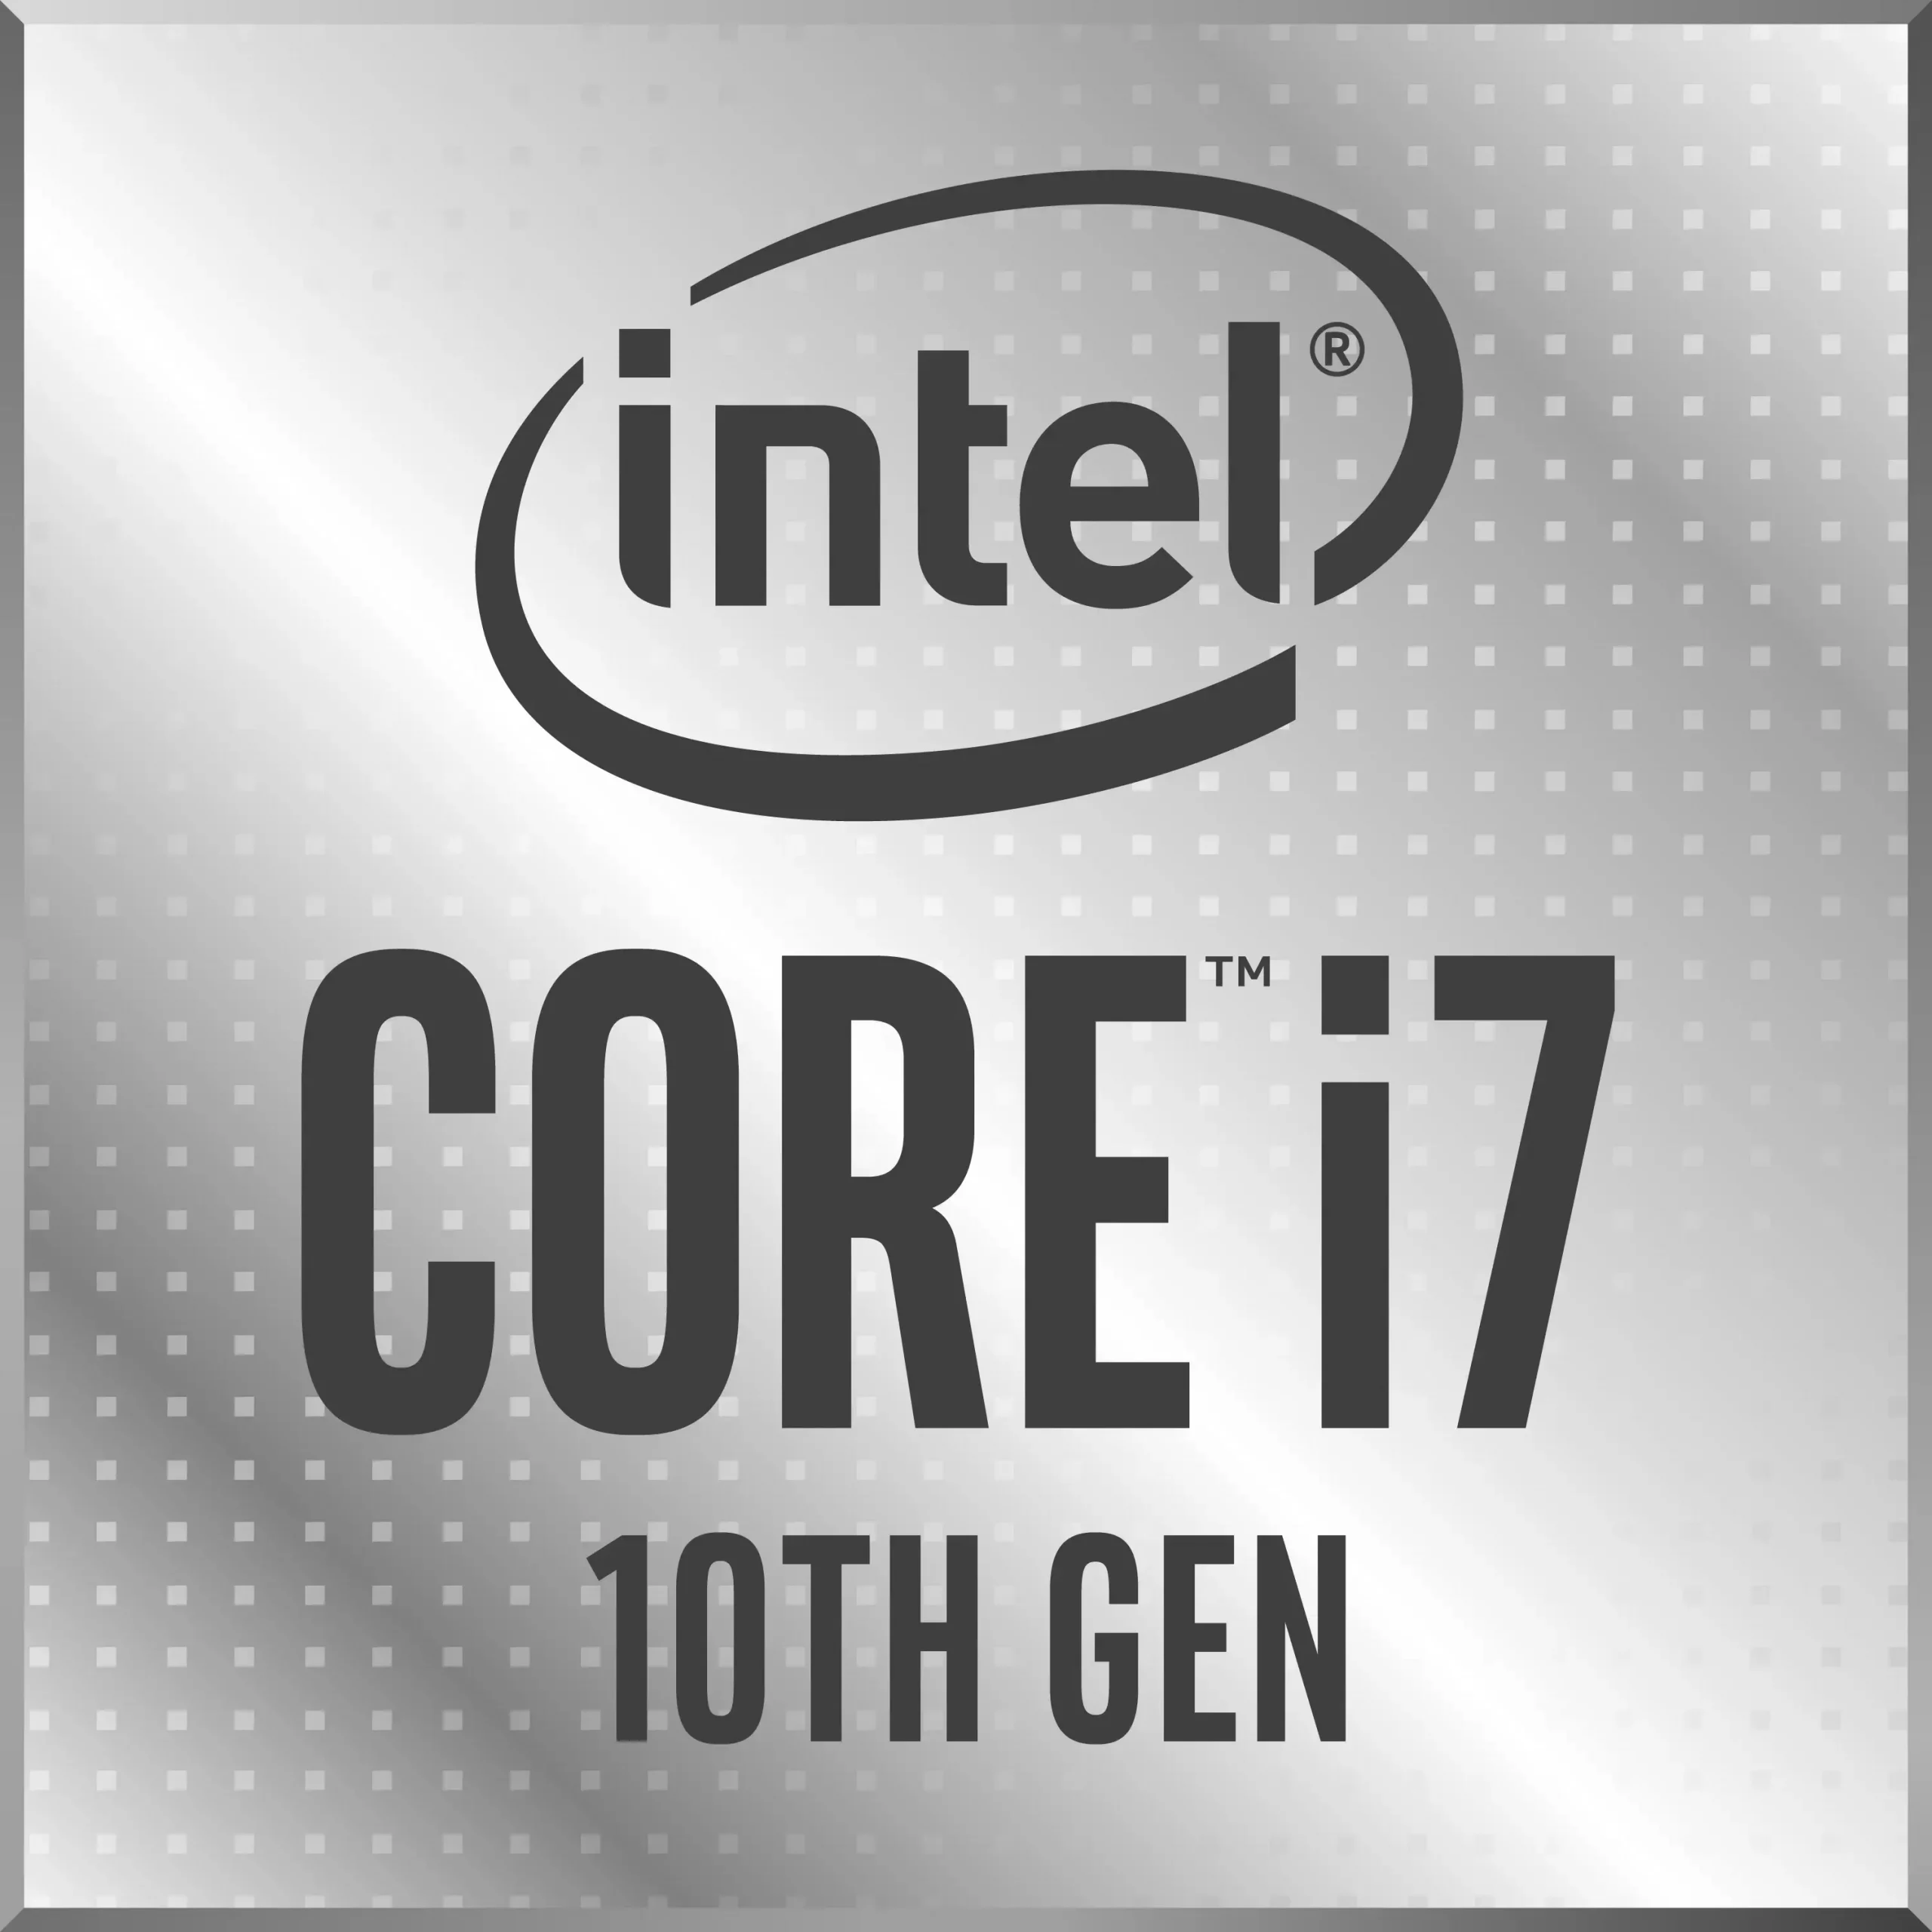 Intel Core i7 10750H